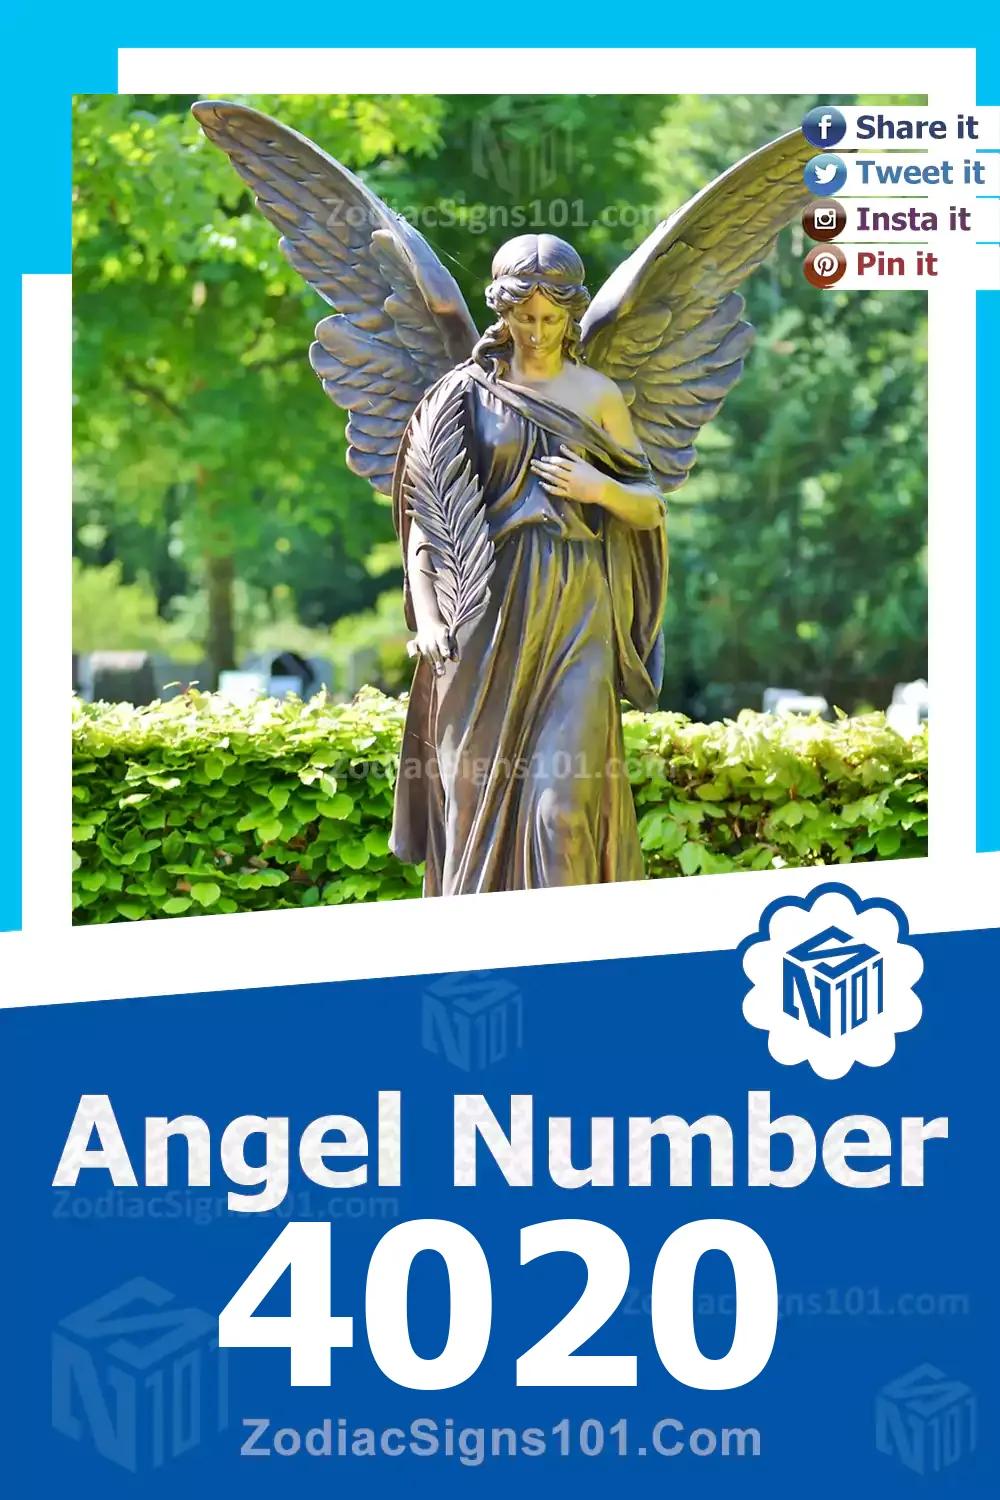 4020-Angel-Number-Meaning.jpg